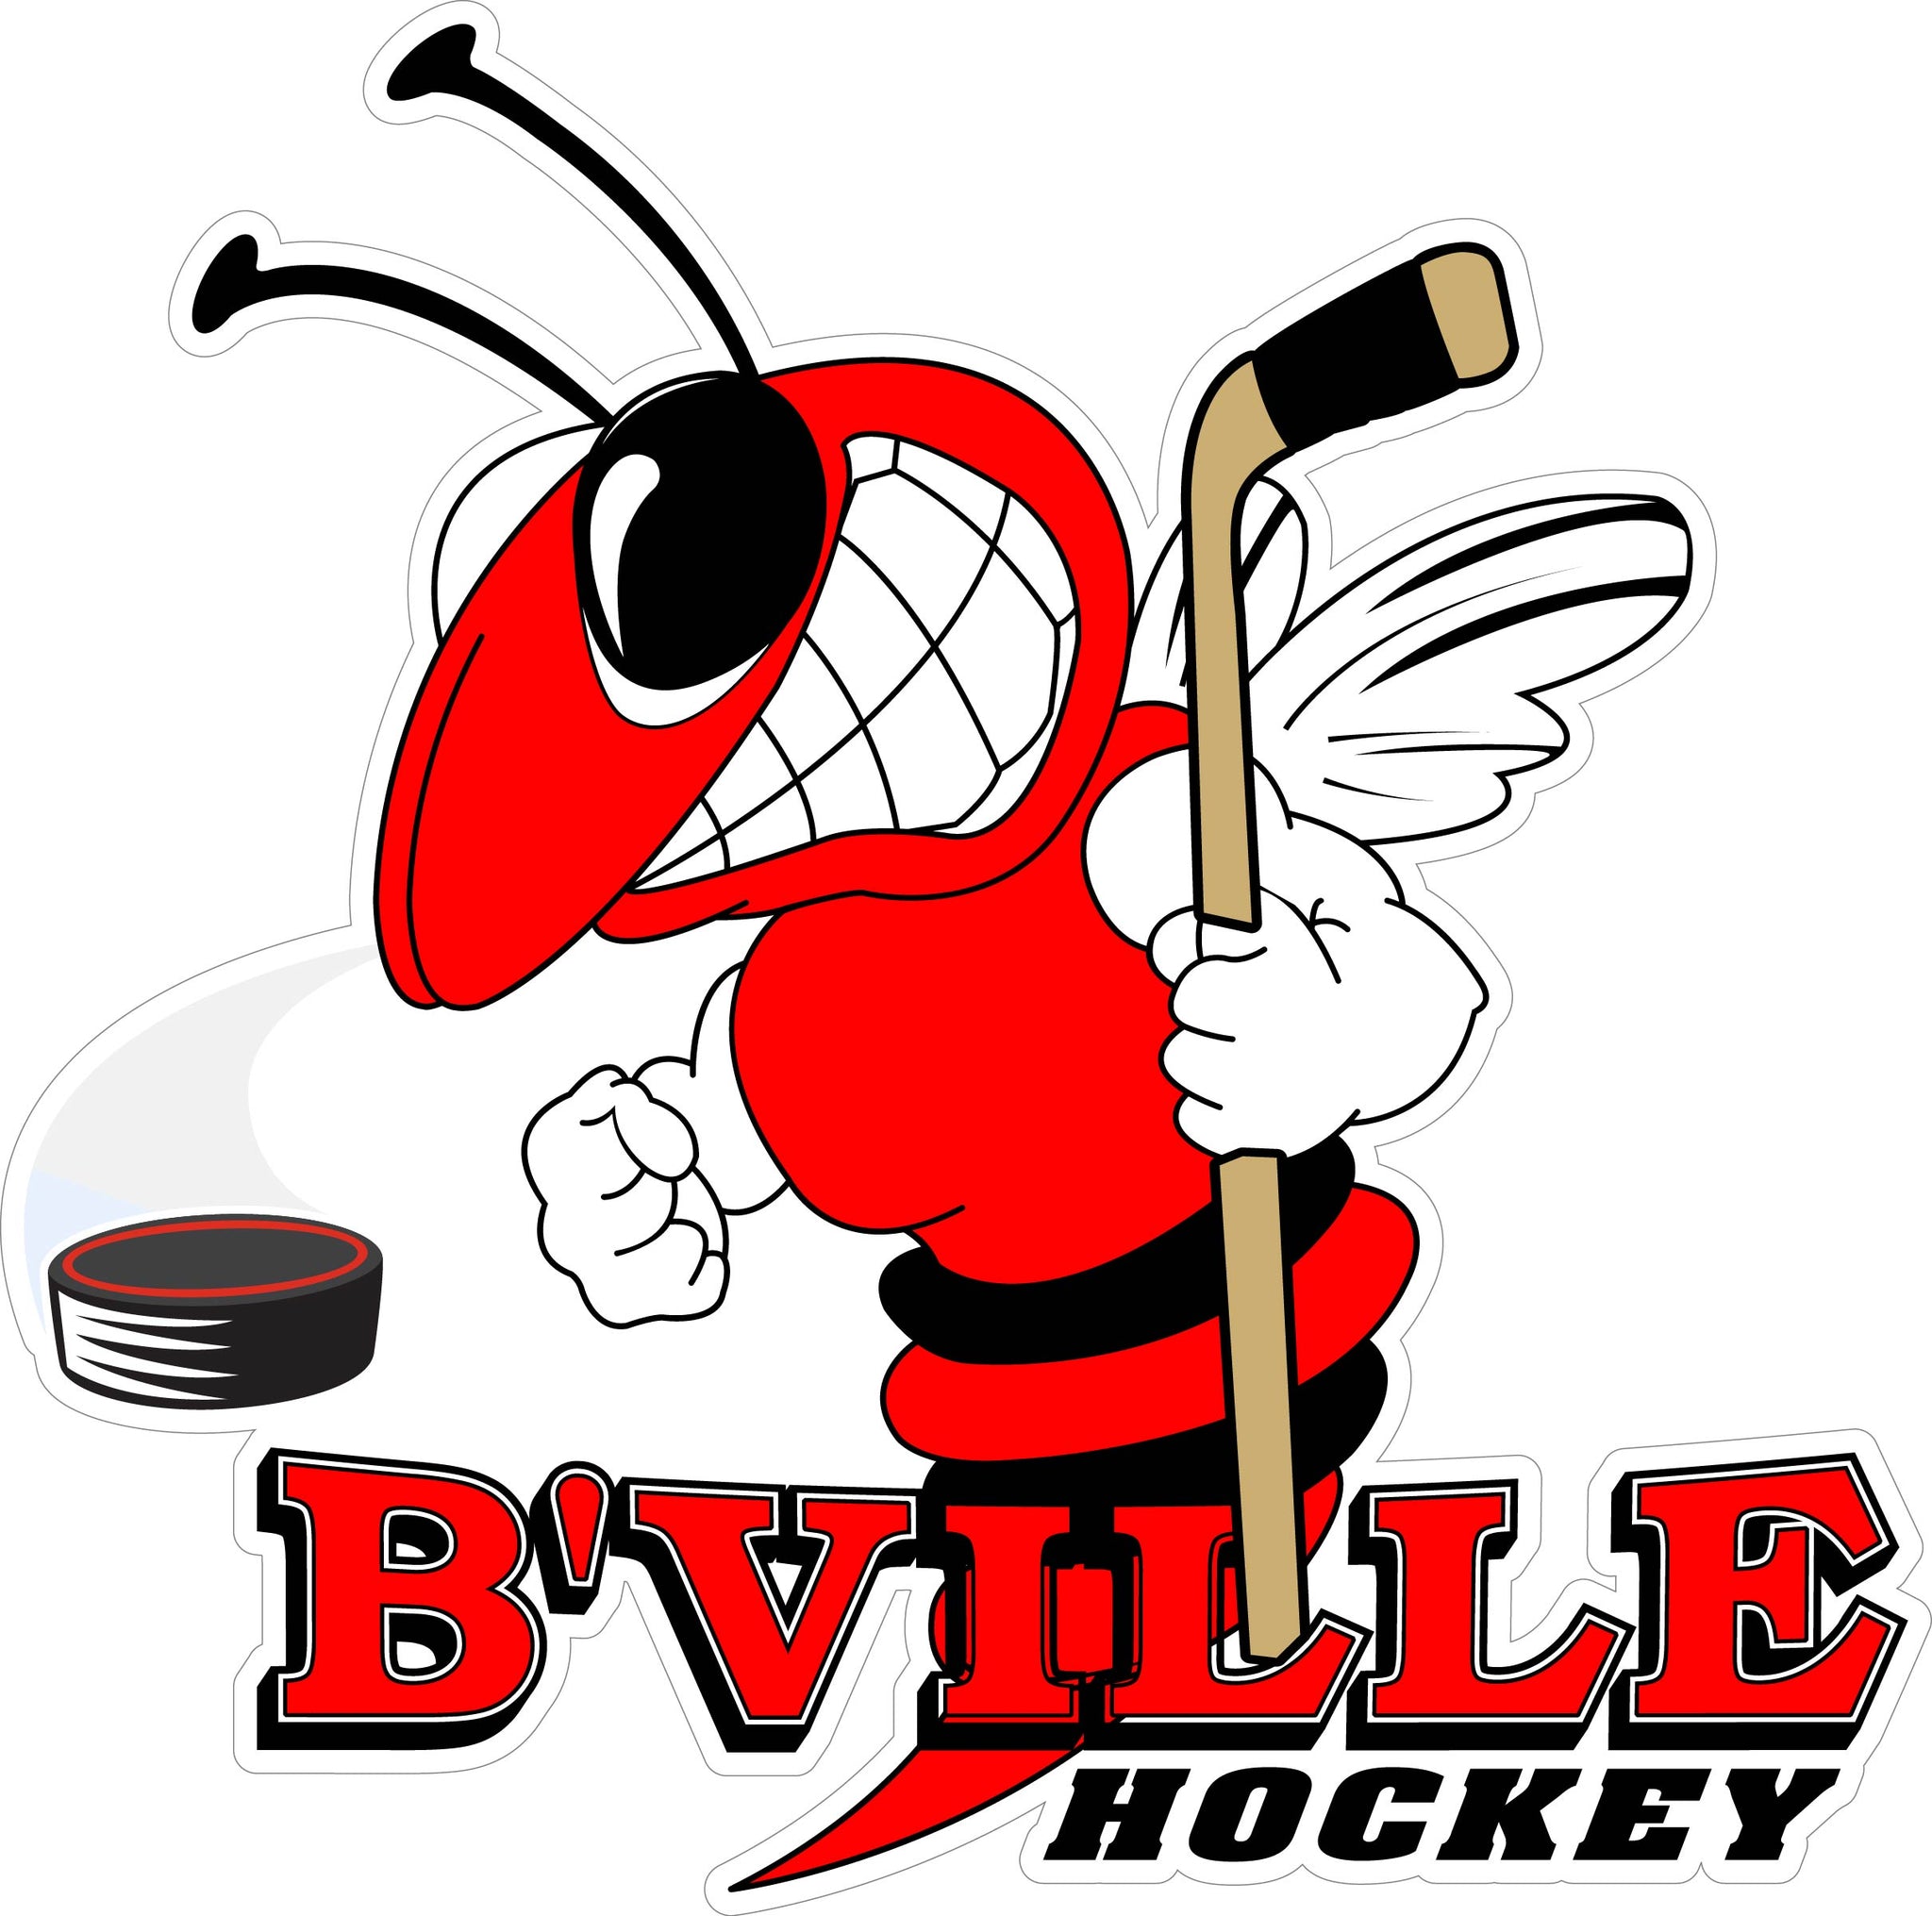 "B'VILLE Hockey" Bee & Hockey Stick Decal